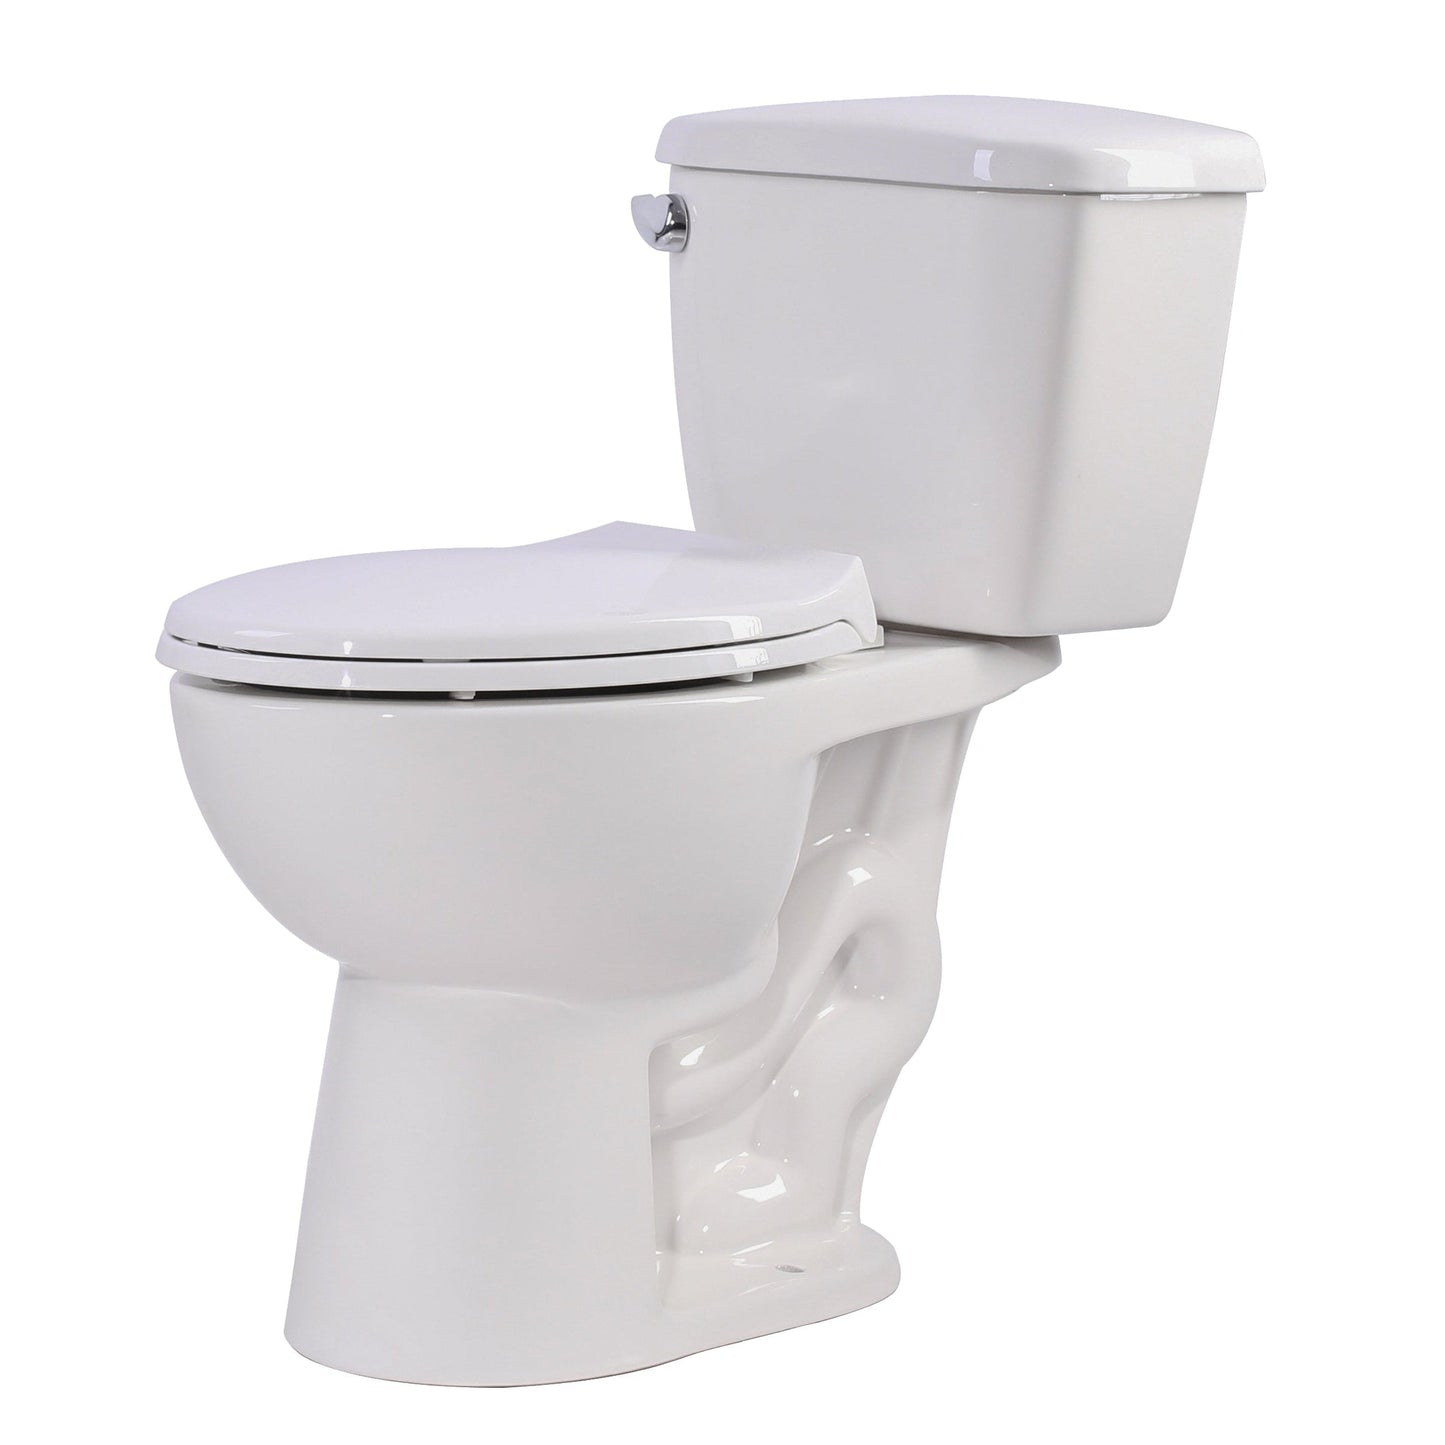 ANZZI Talos Series White Elongated Bathroom Toilet With Dual Flush System